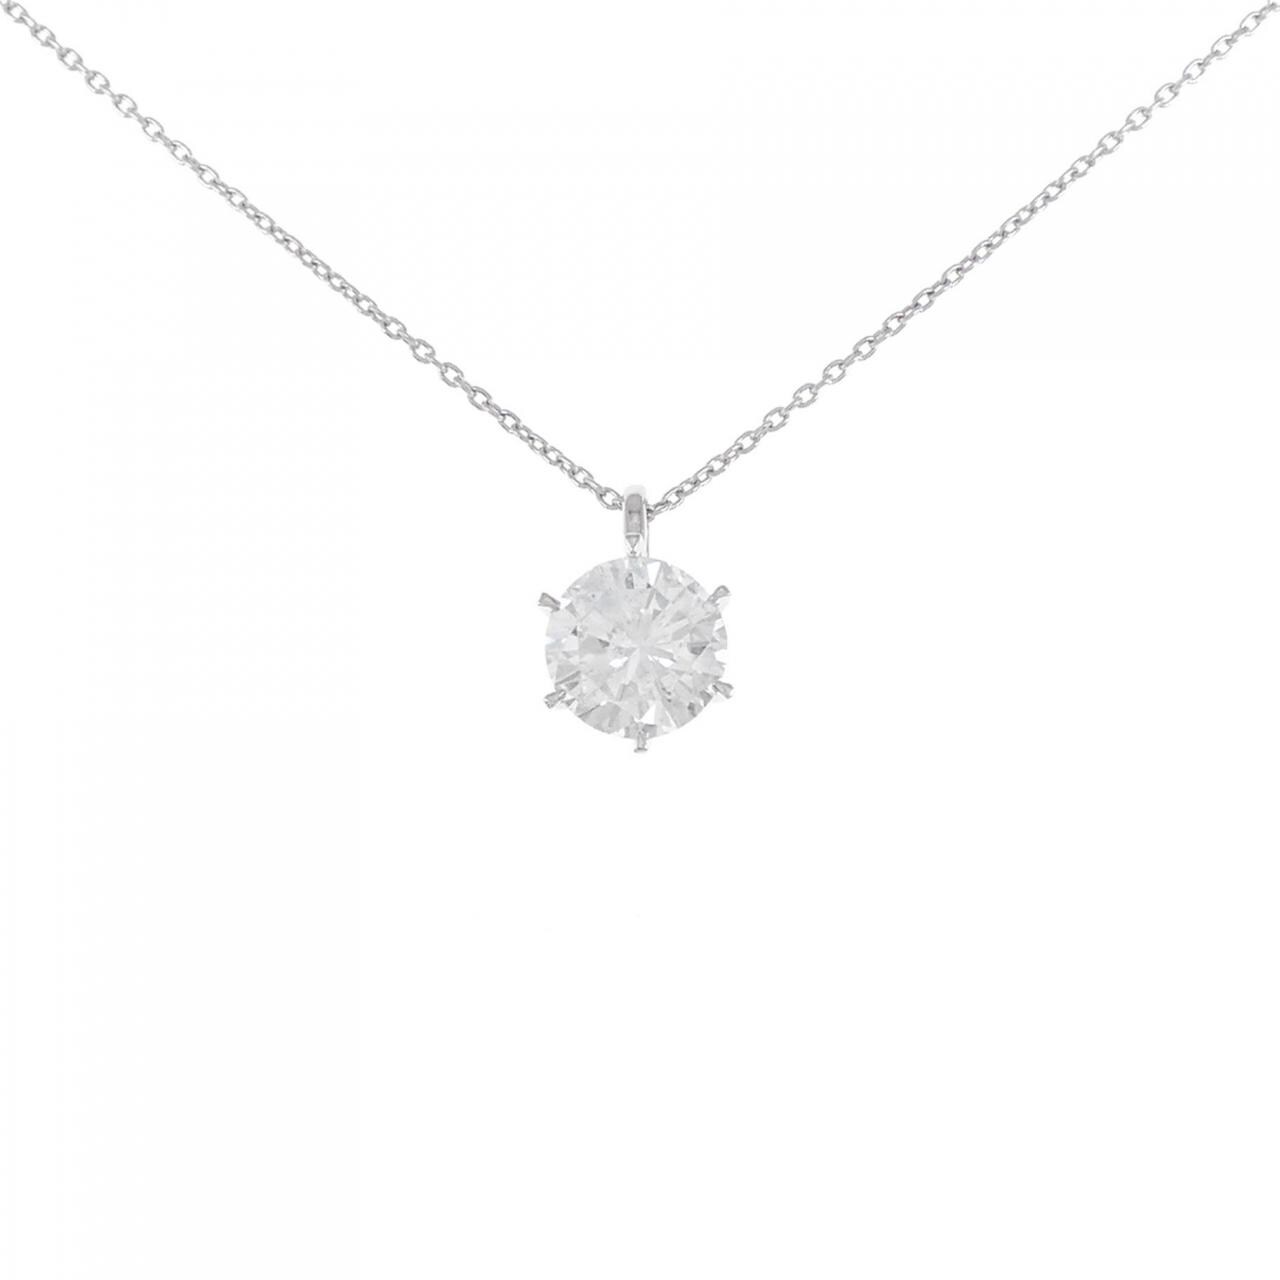 [Remake] PT Diamond Necklace 3.008CT D I1 Good